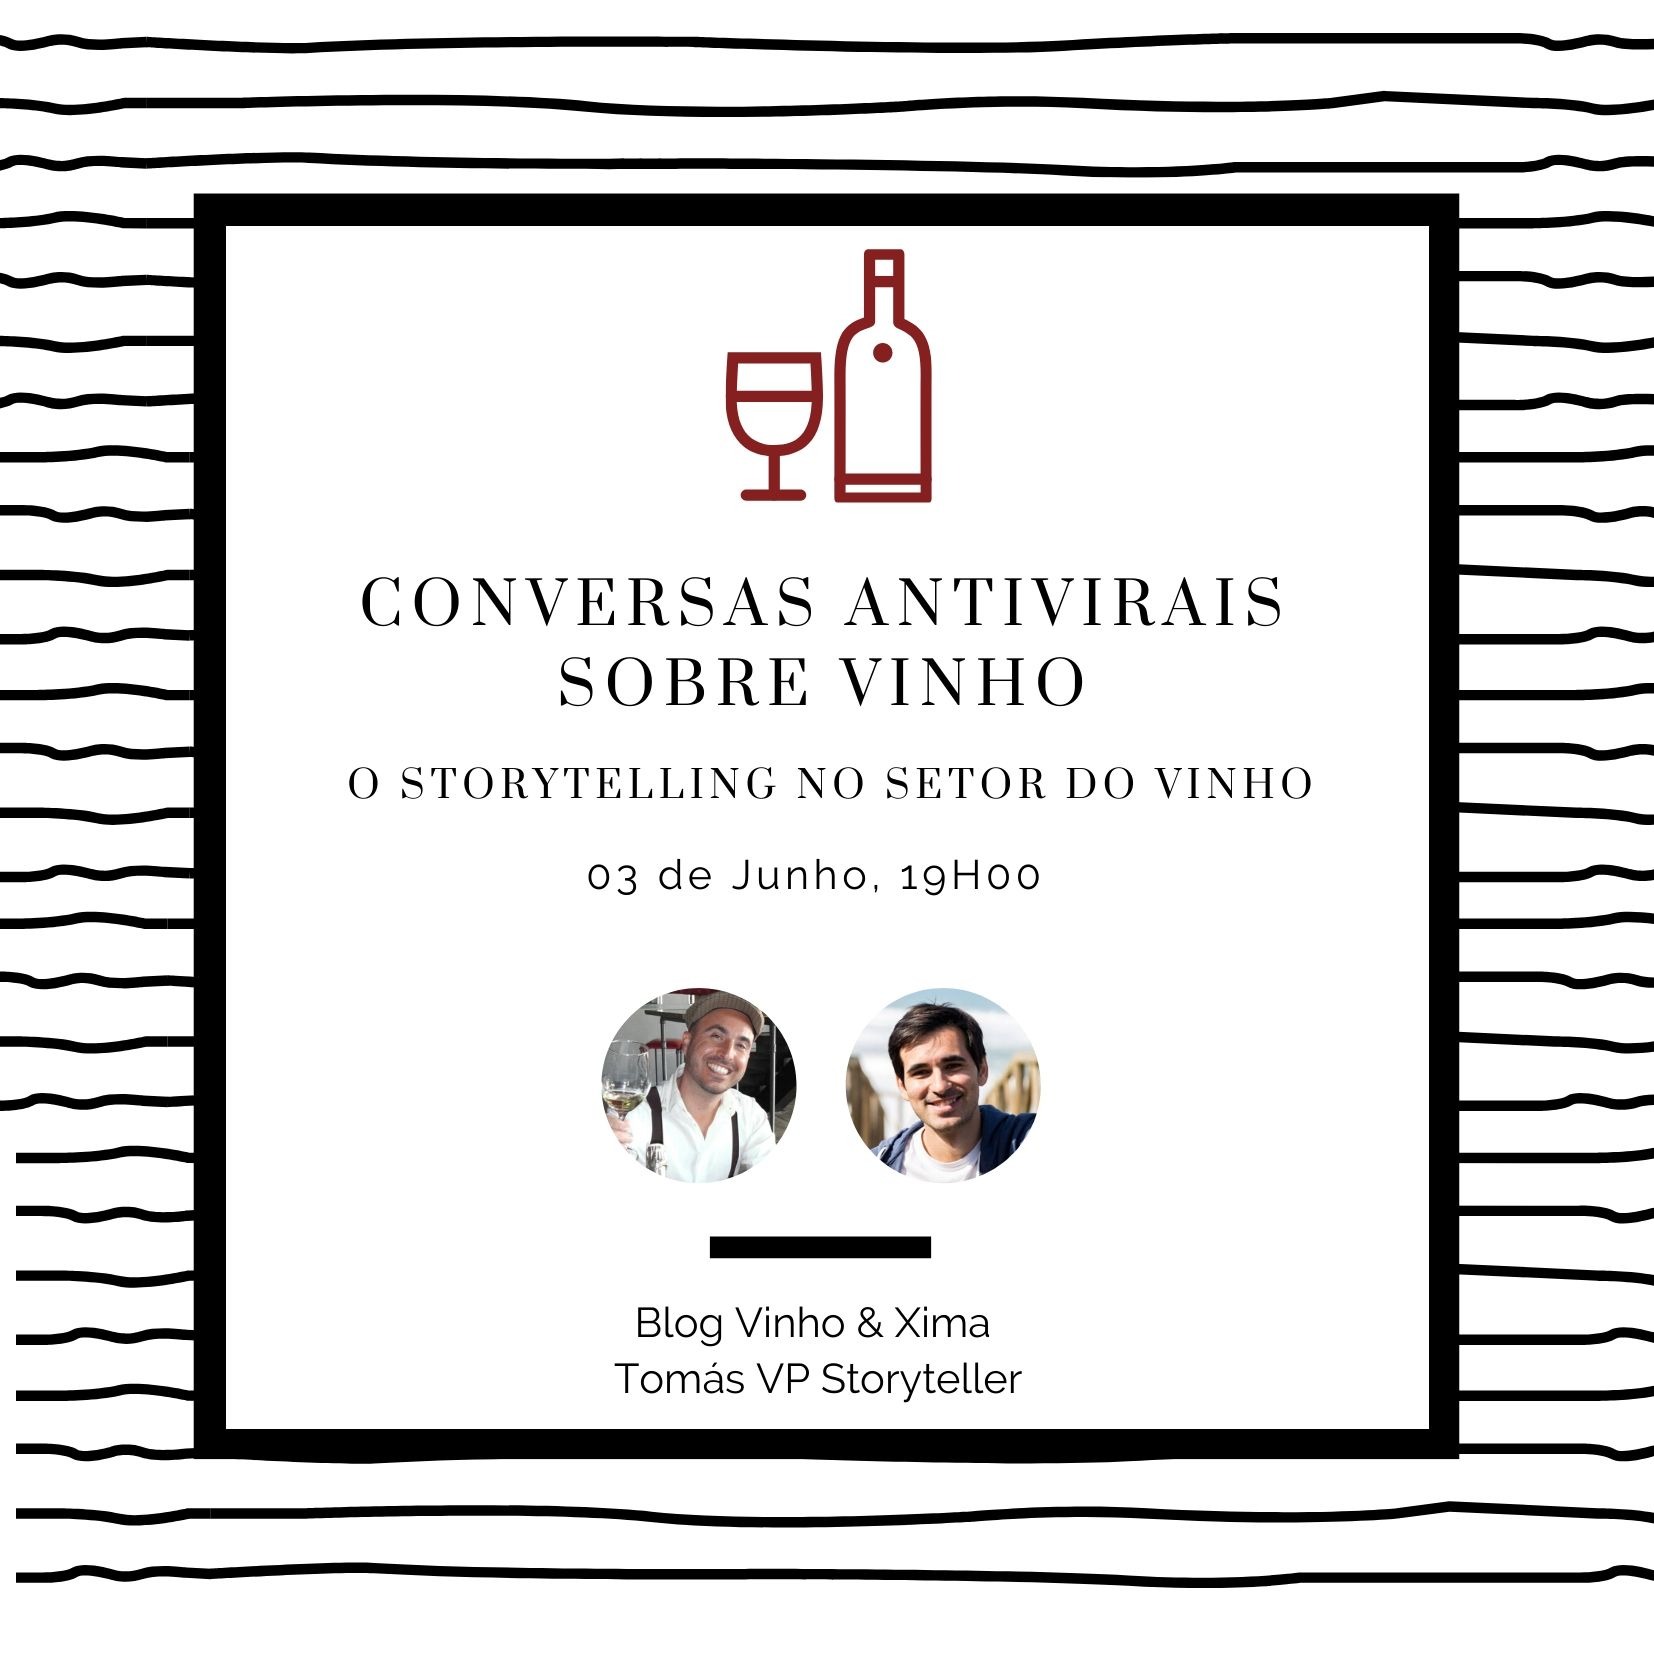 tomasvpstoryteller-projects-talks&conferences-blogvinhoxima-conversasantivirais-cover